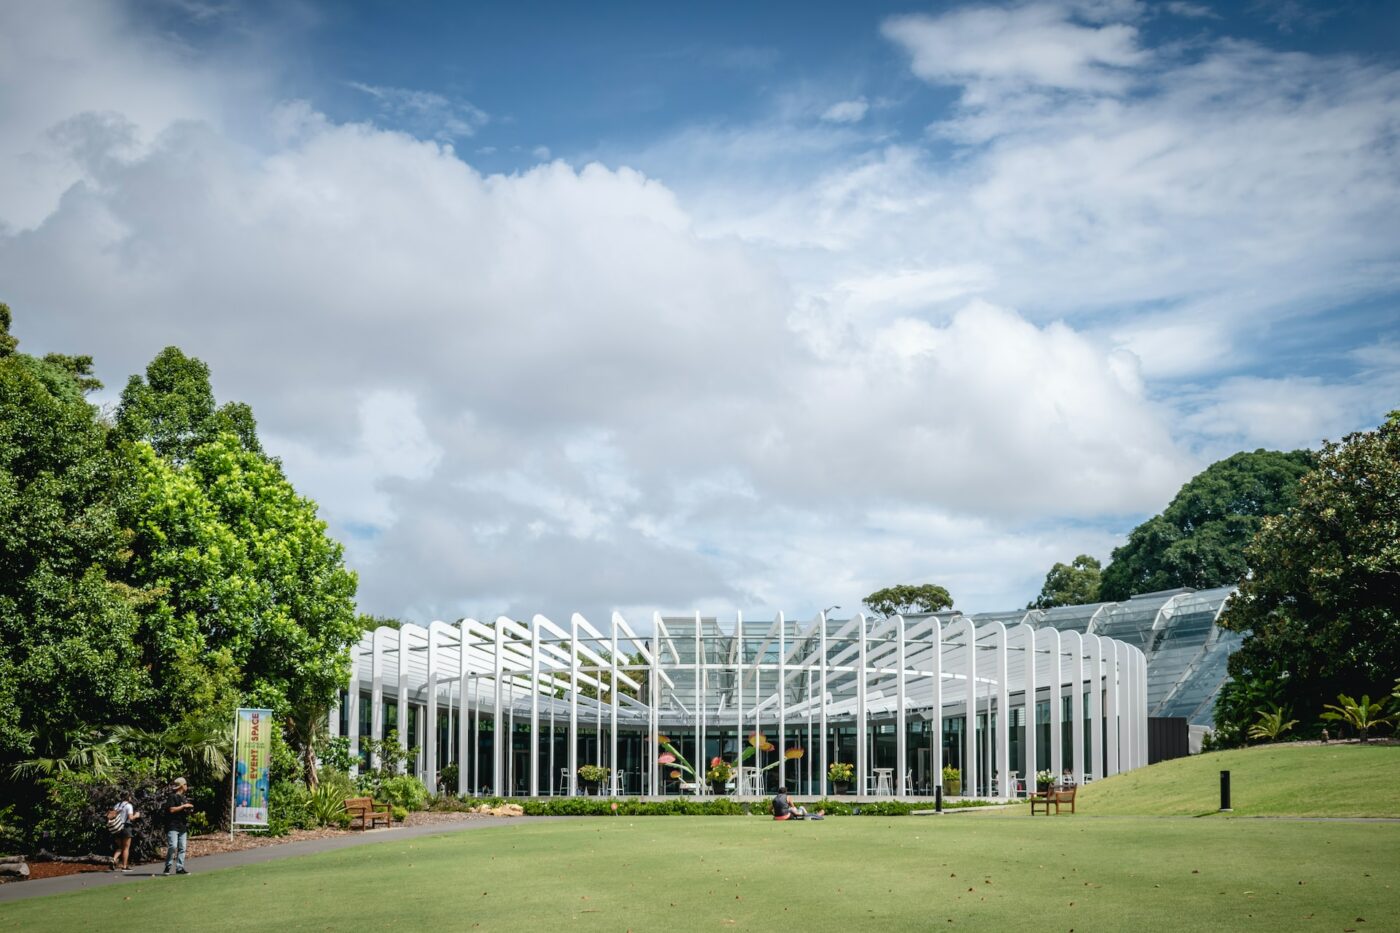 The Calyx, Royal Botanic Gardens Sydney